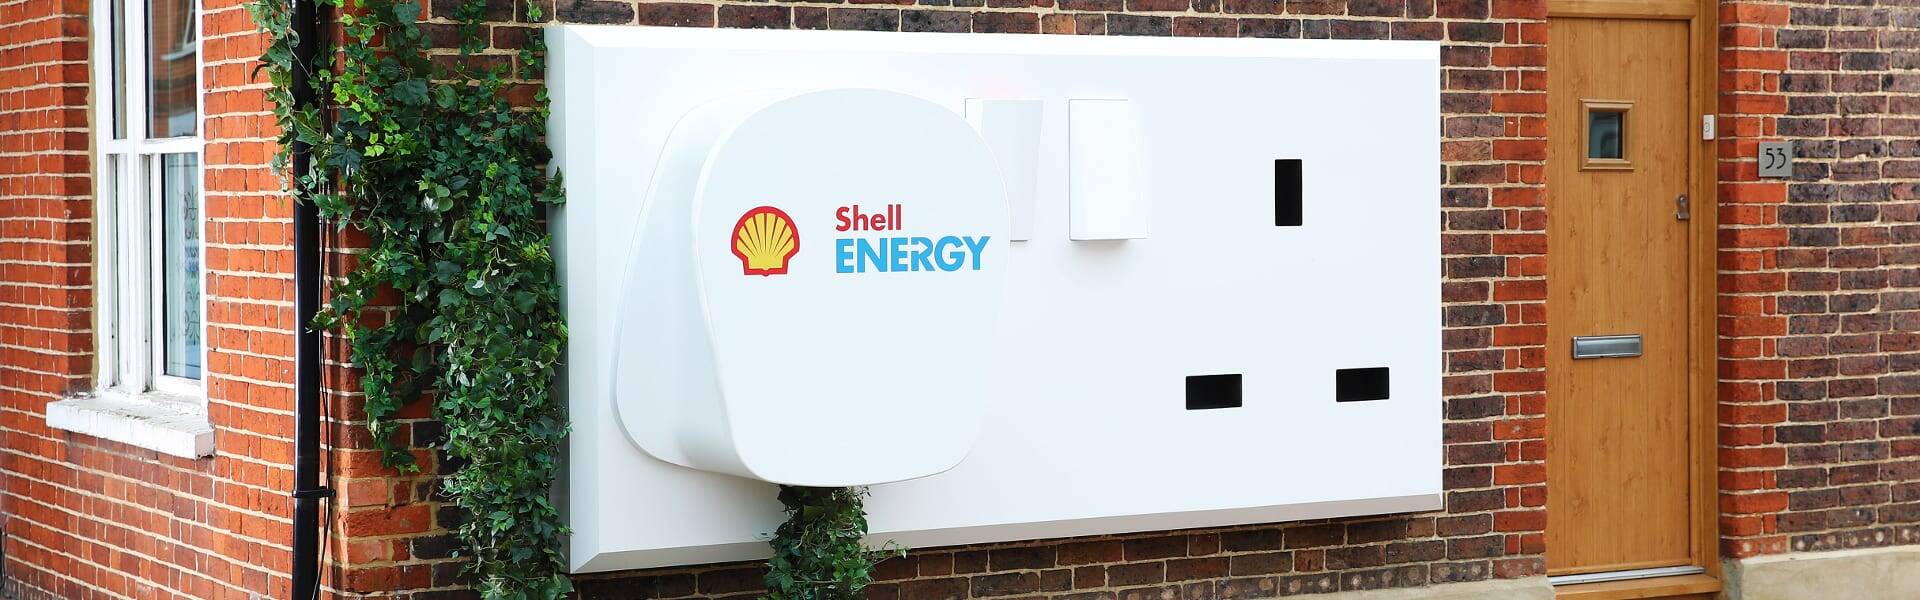 Shell mulls future of UK retail business